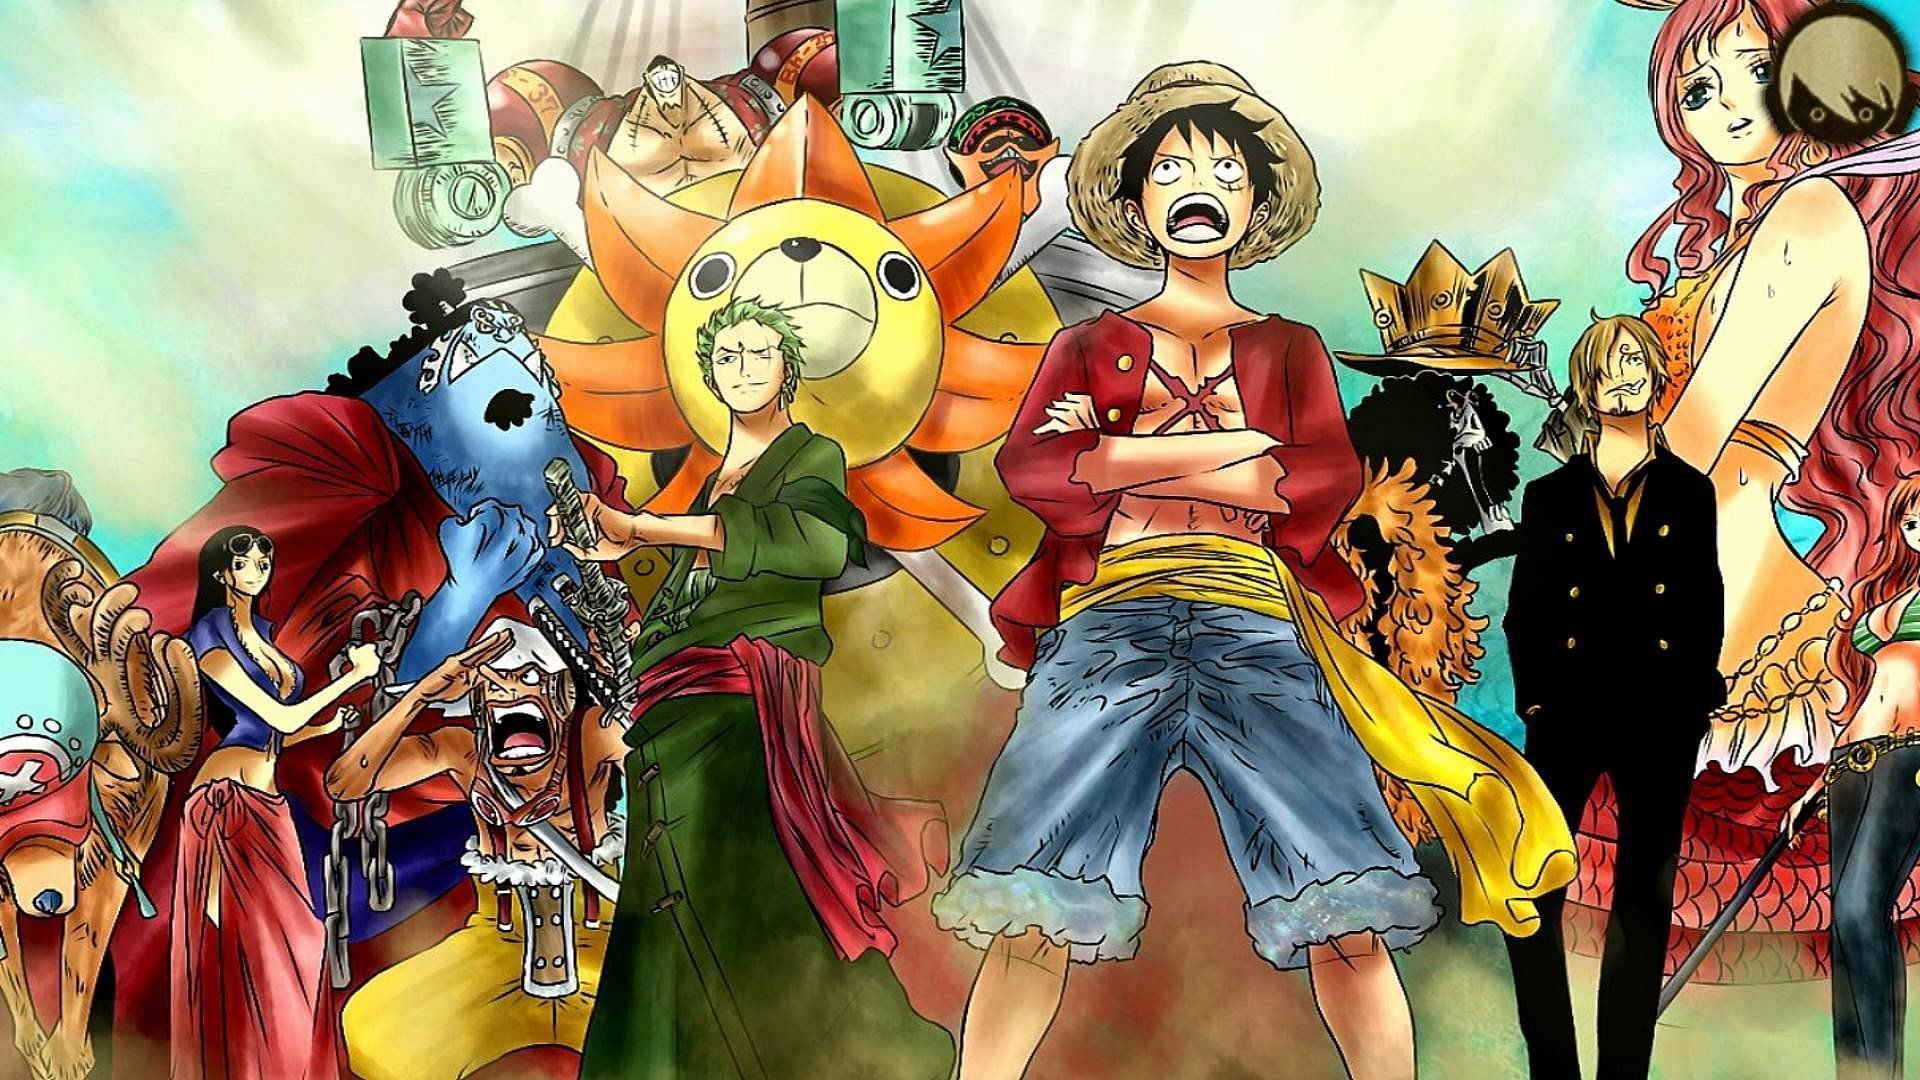 Kokoro Voice - One Piece (TV Show) - Behind The Voice Actors